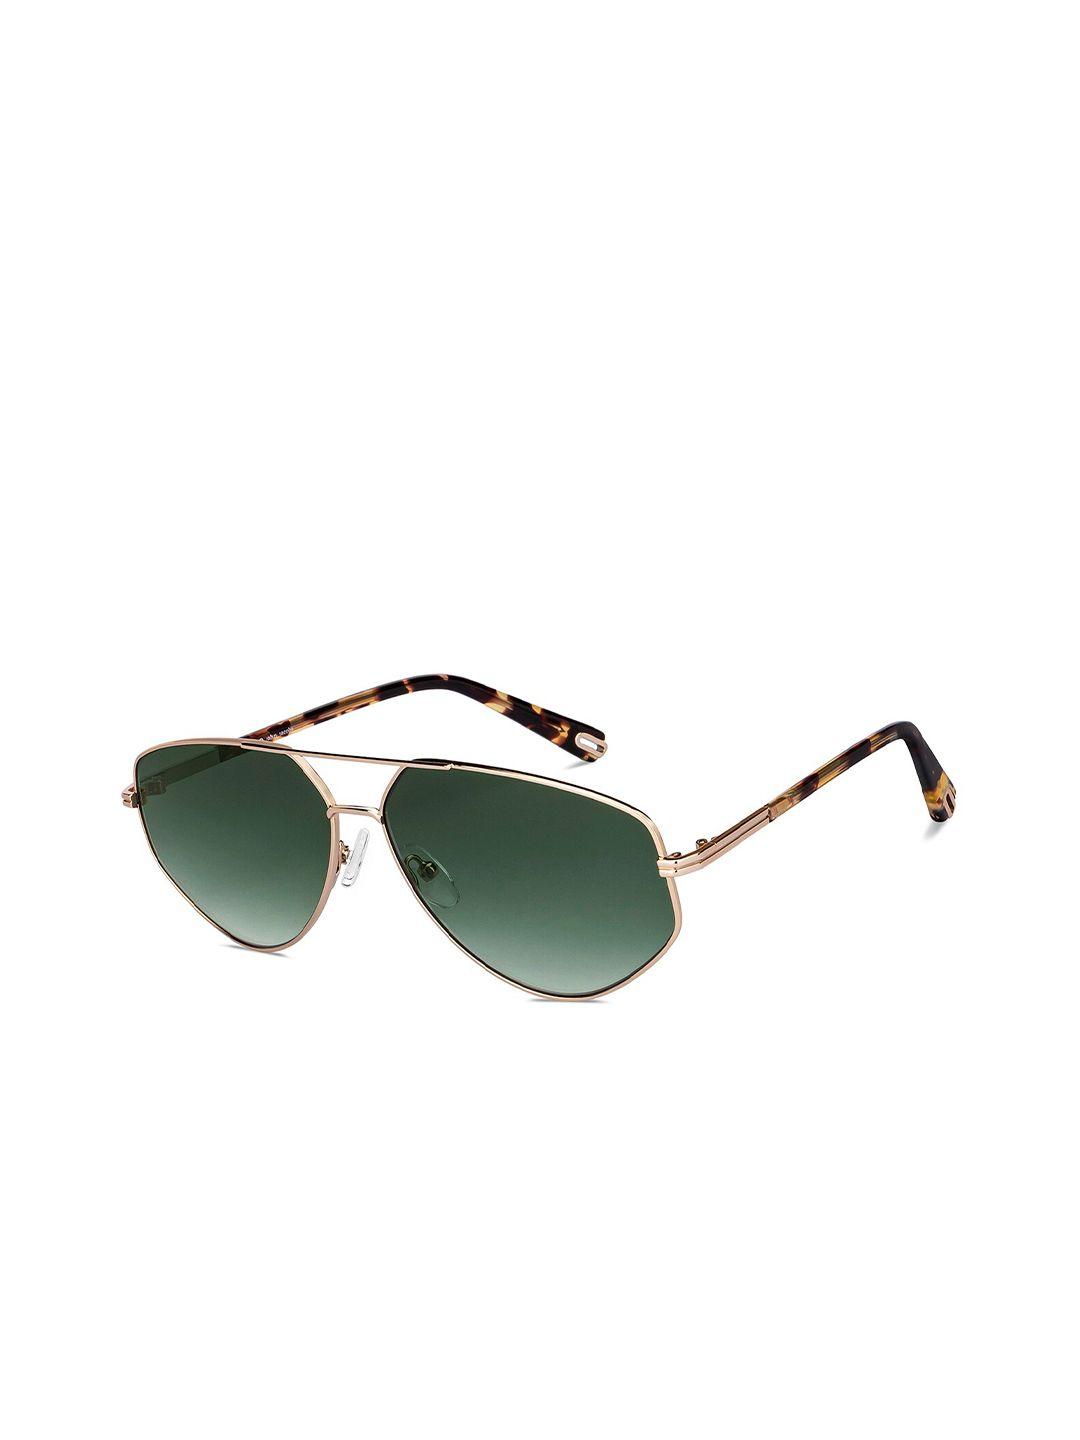 john jacobs unisex green lens & gold-toned aviator sunglasses with uv protected lens